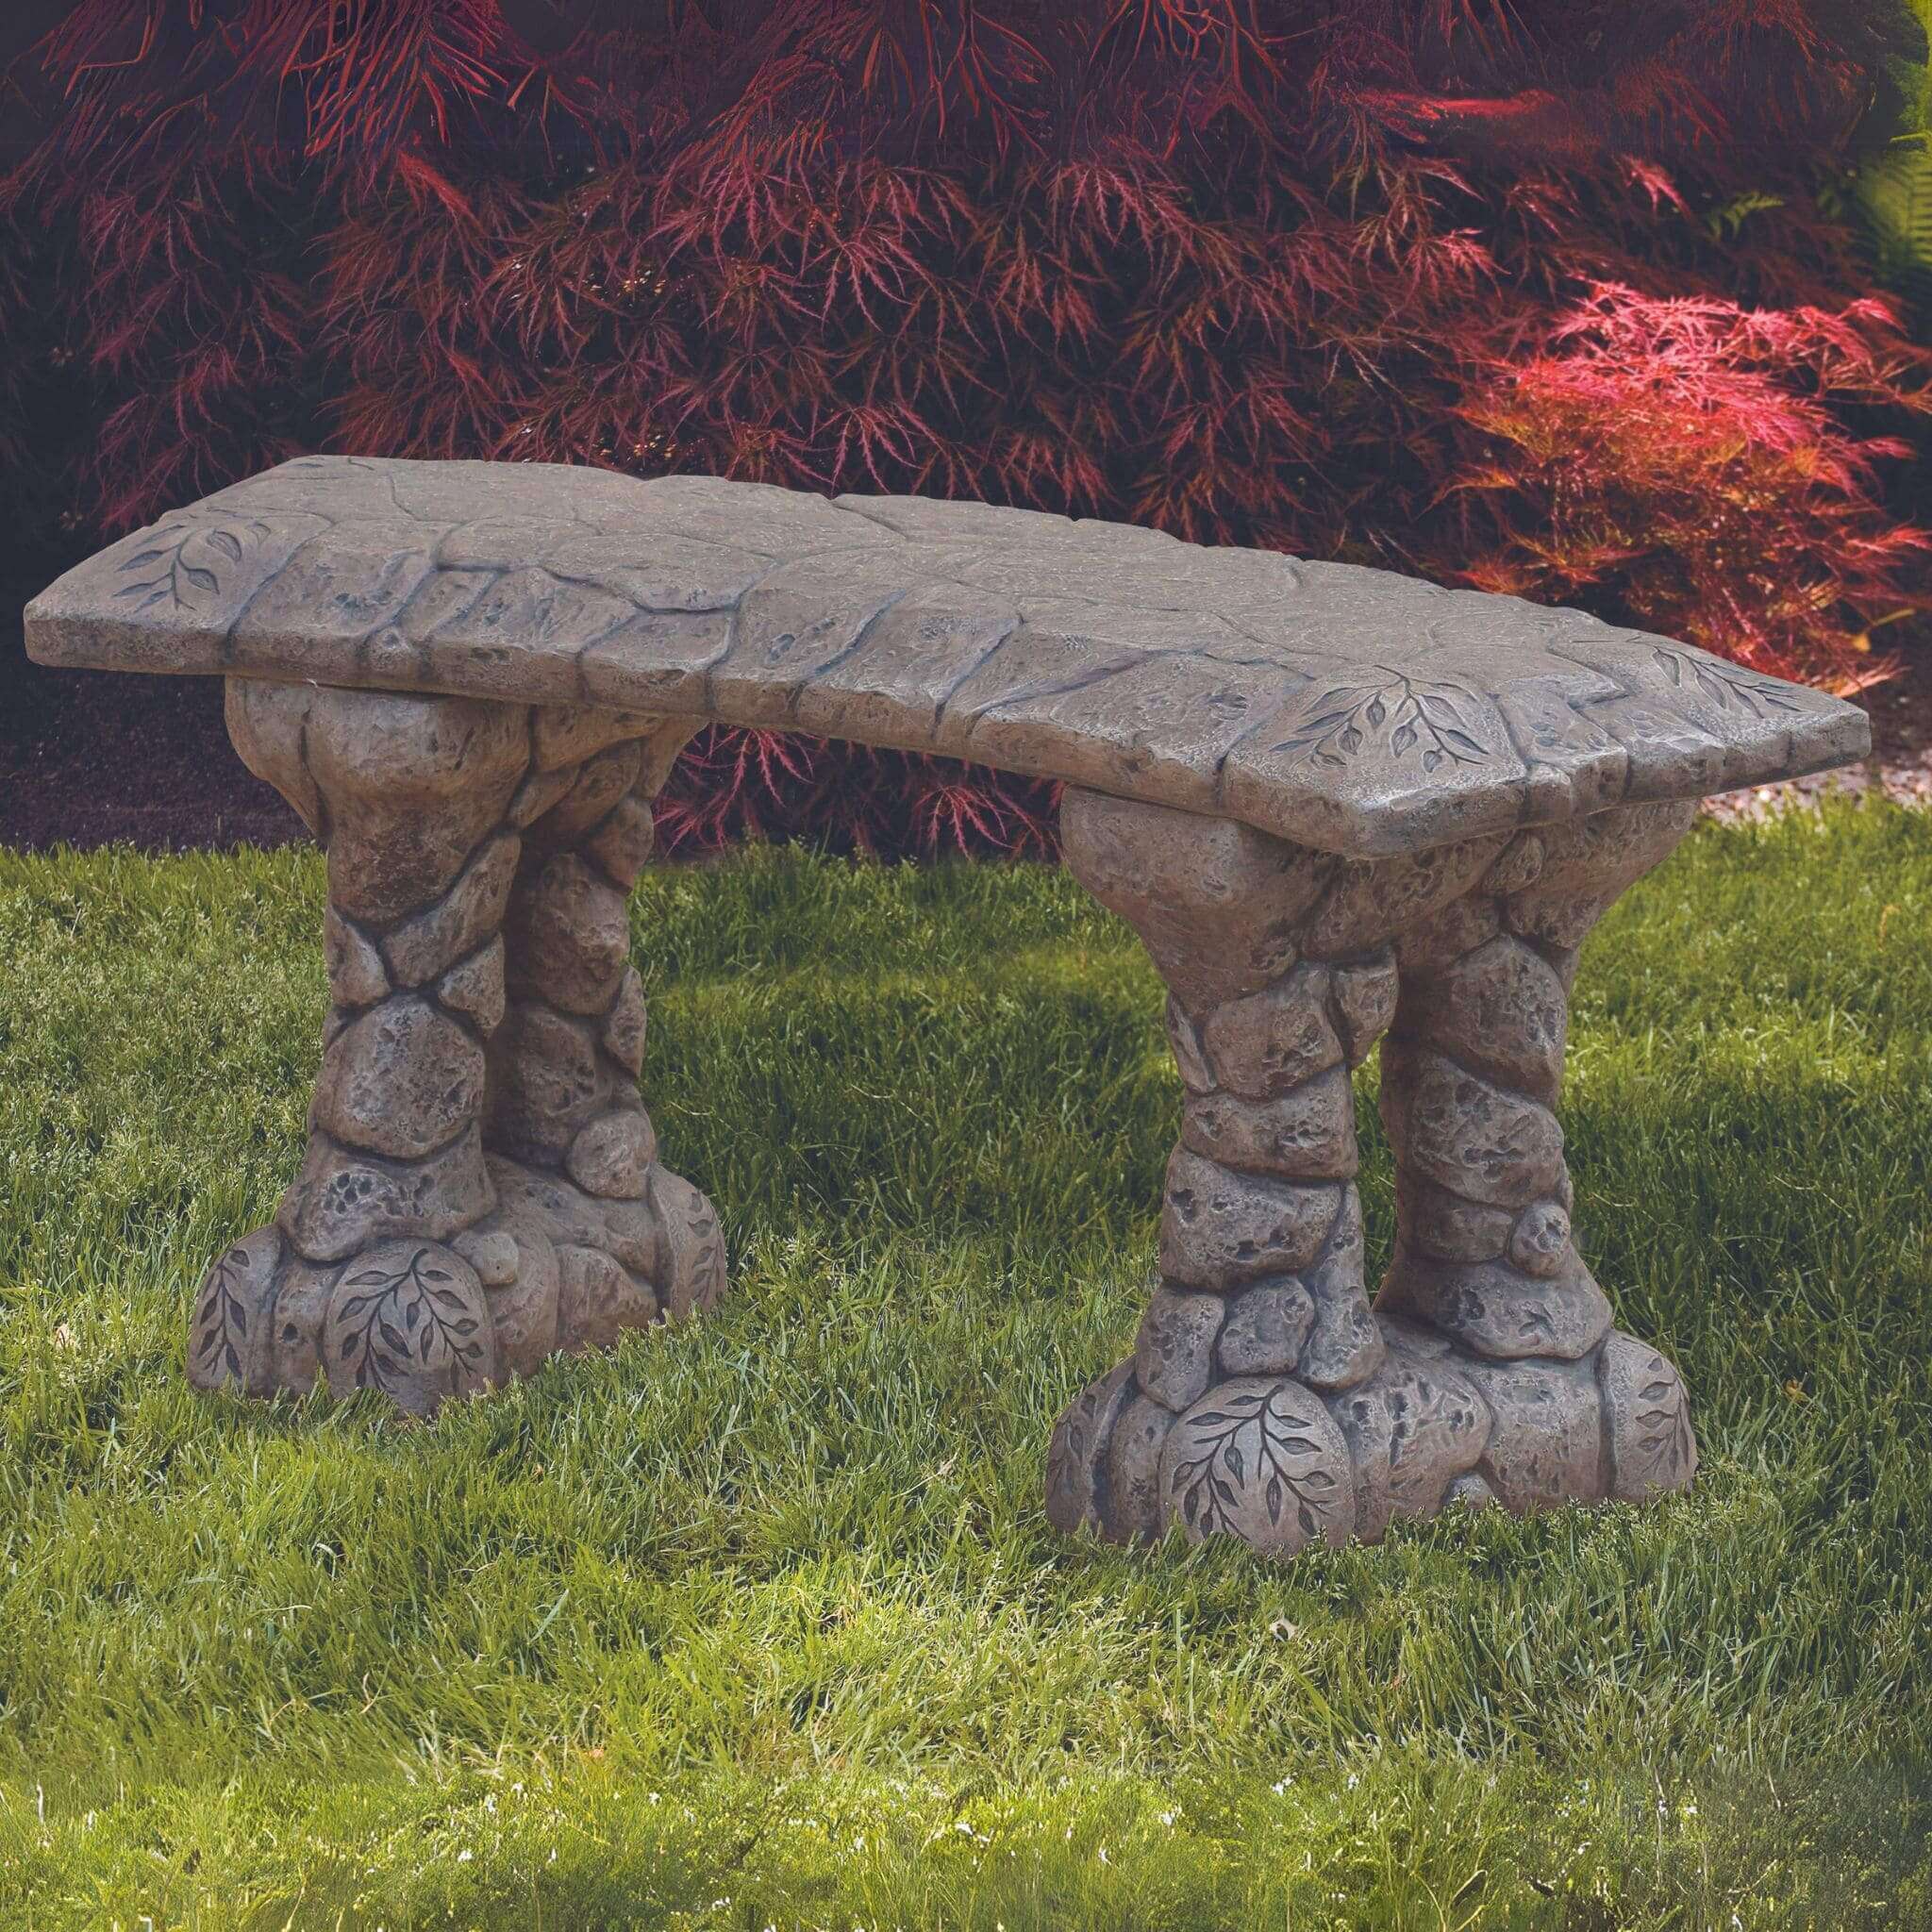 The Stone Concrete Garden Bench - Massarellis #4204